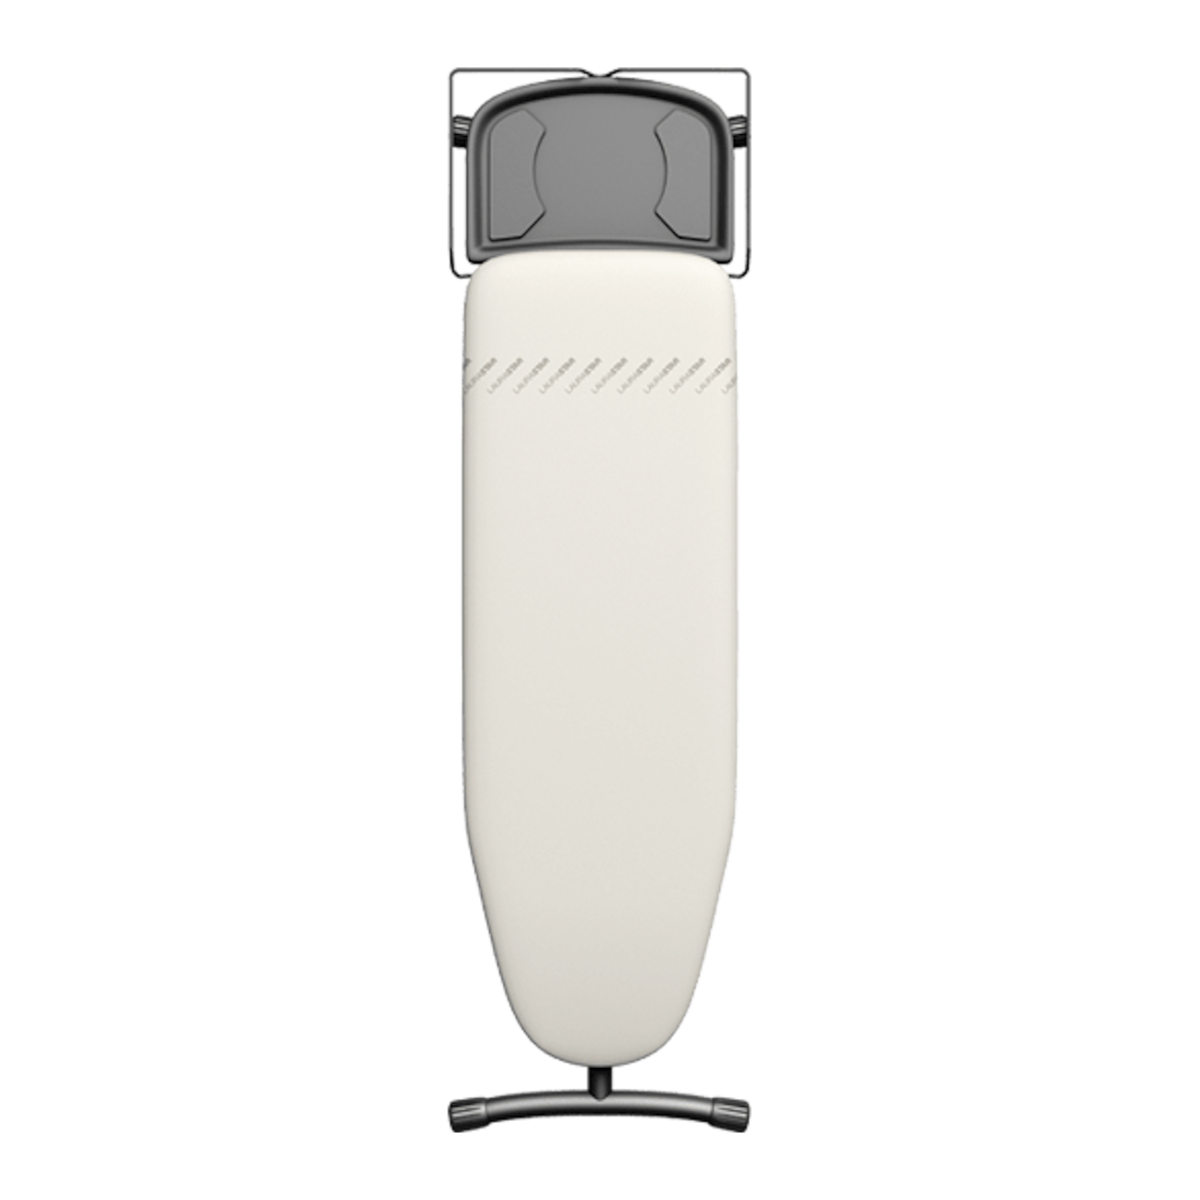 LAURASTAR COMFORTBOARD ironing board - beige